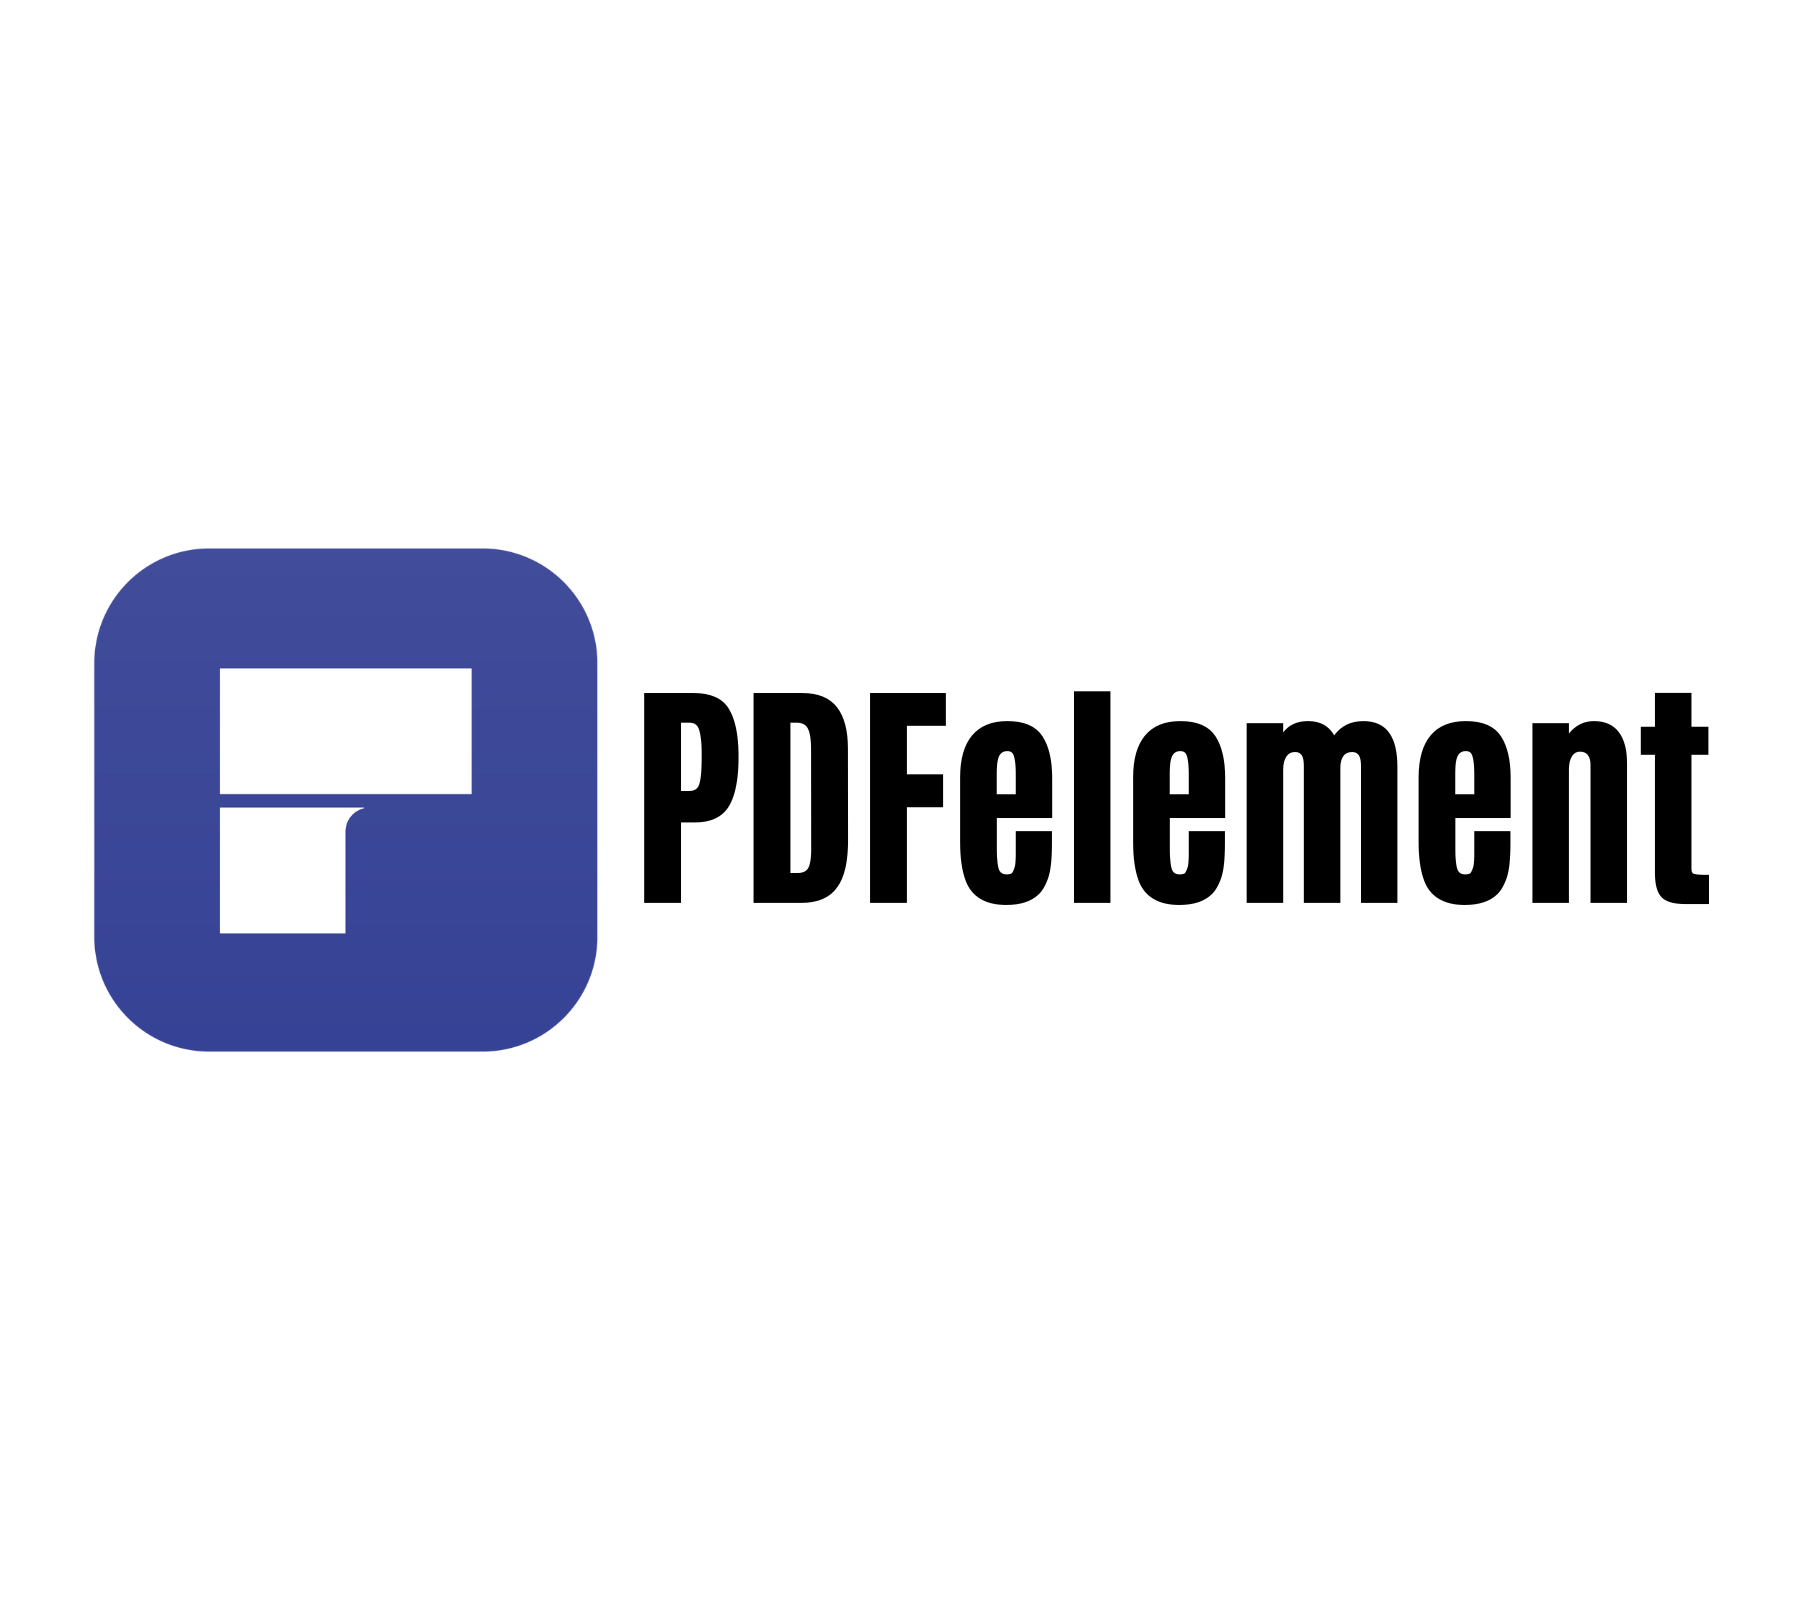 relevant-pdfelement-logo.png